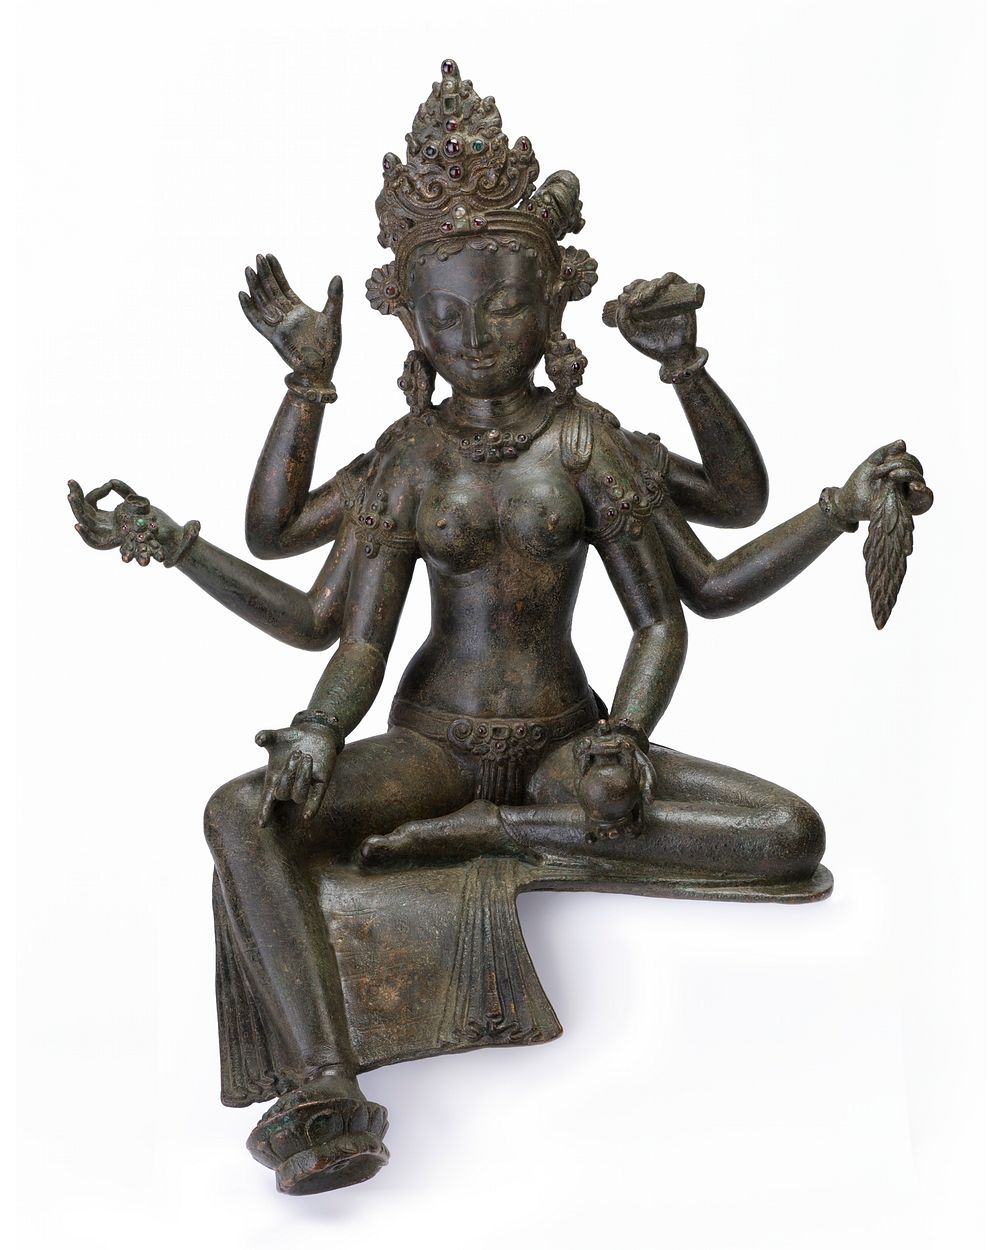 The Buddhist Goddess Vasudhara